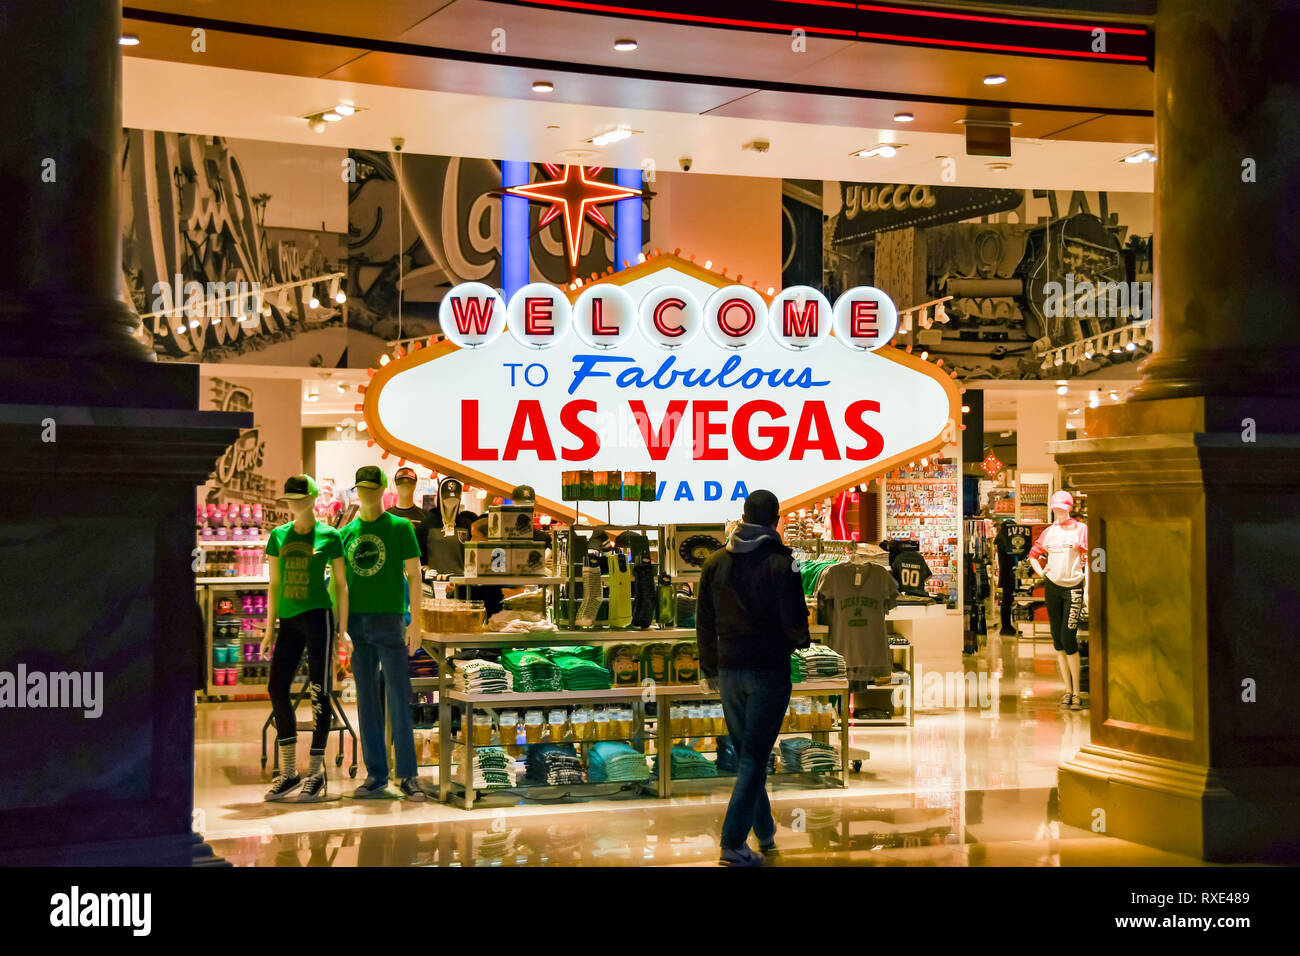 LAS VEGAS, NV, USA - FEBRUARY 2019: Neon sign "Welcome to Fabulous Las Vegas" at the entrance to a souvenir shop inside a shopping mall in Las Vegas. Stock Photo